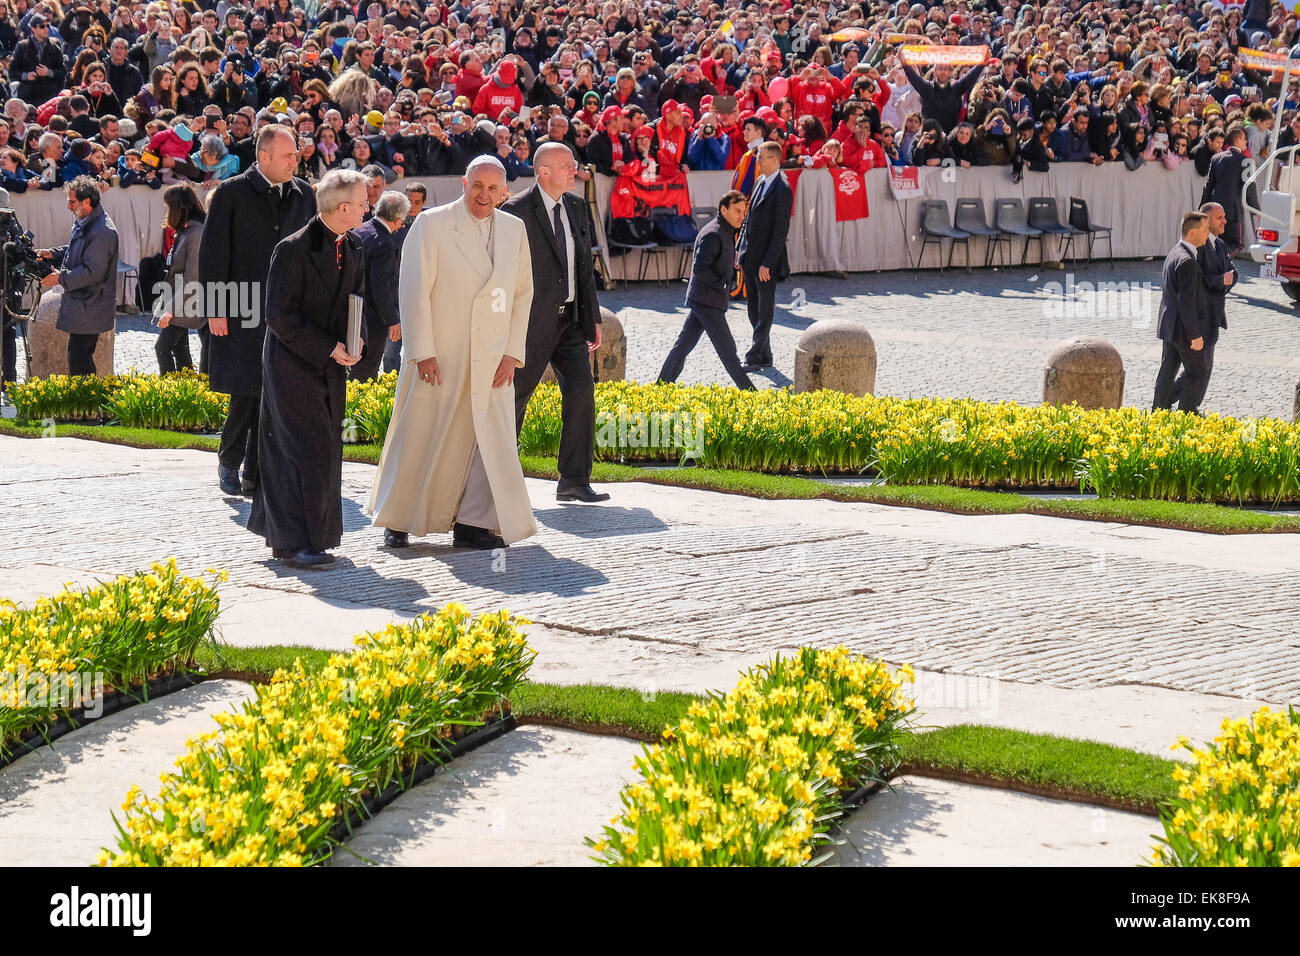 Vatikan-Stadt. 8. April 2015. Vatikan Papst Francis General Audience in den Petersplatz 8. April 2015 Credit: wirklich Easy Star/Alamy Live News Stockfoto